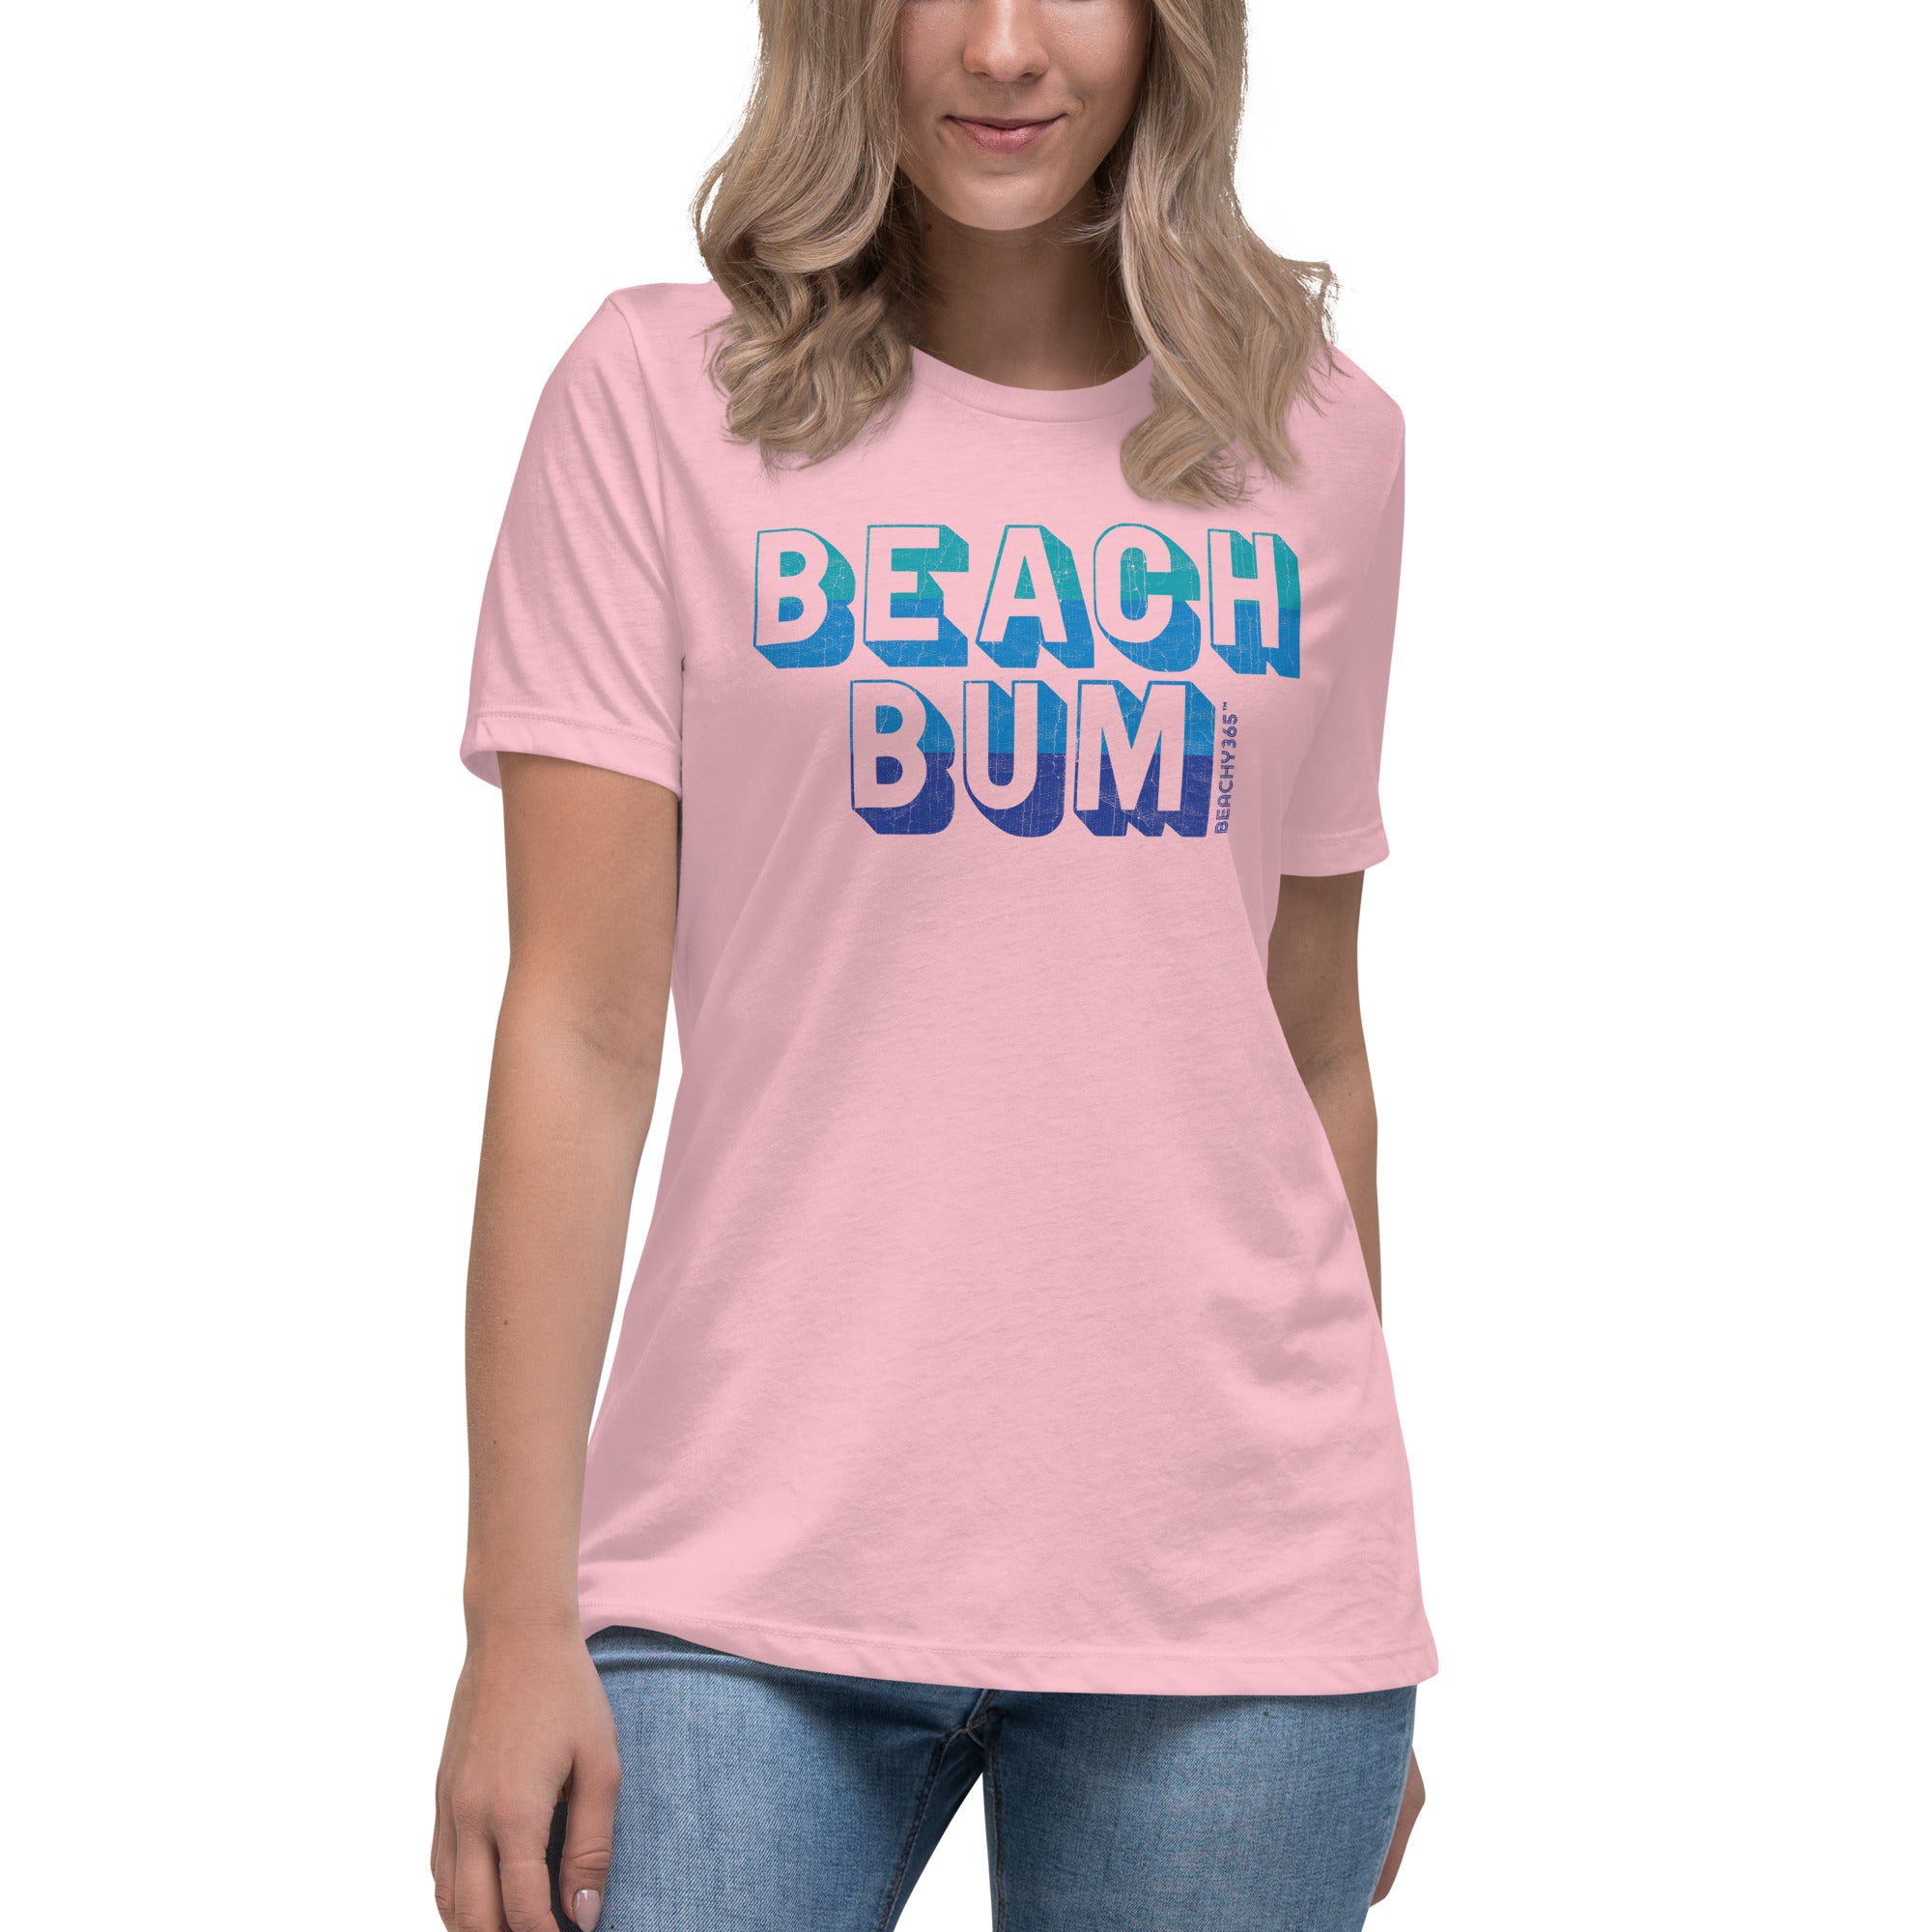 Beach Bum Vintage Women's Relaxed Tee